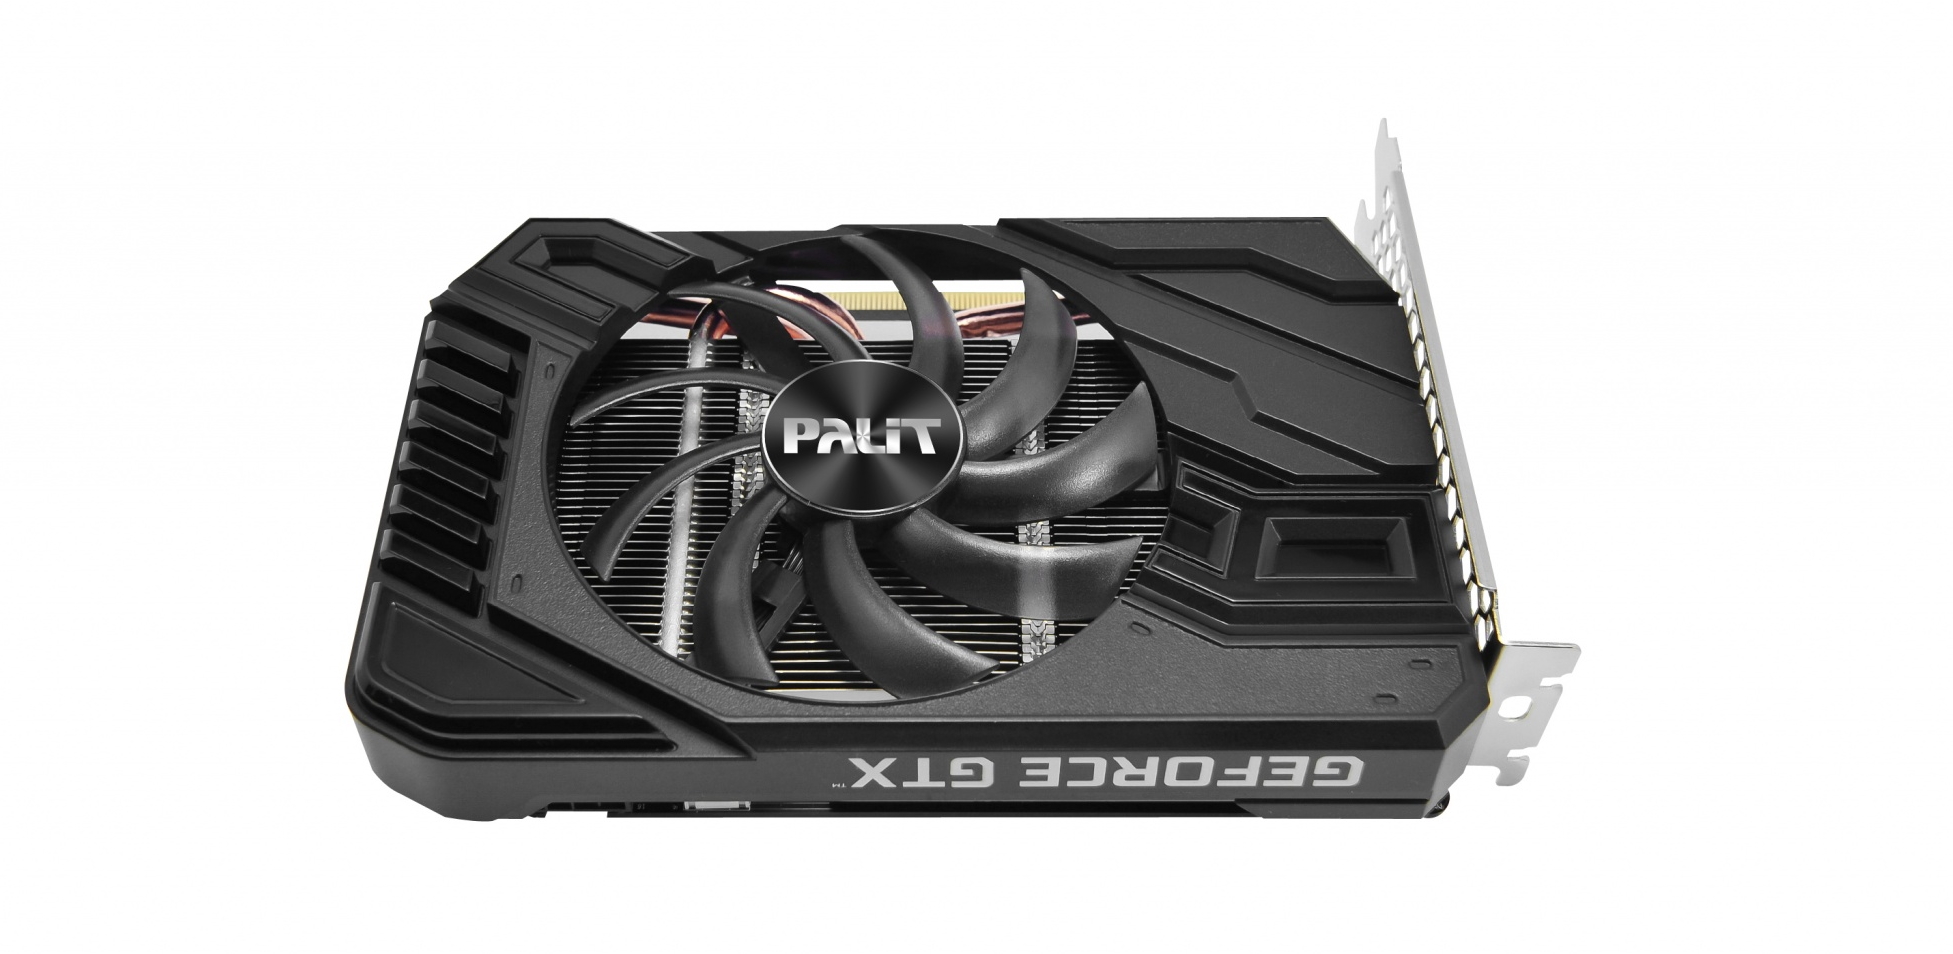 Palit GeForce GTX 1660 Ti StormX 6GB GDDR6 Graphics Card